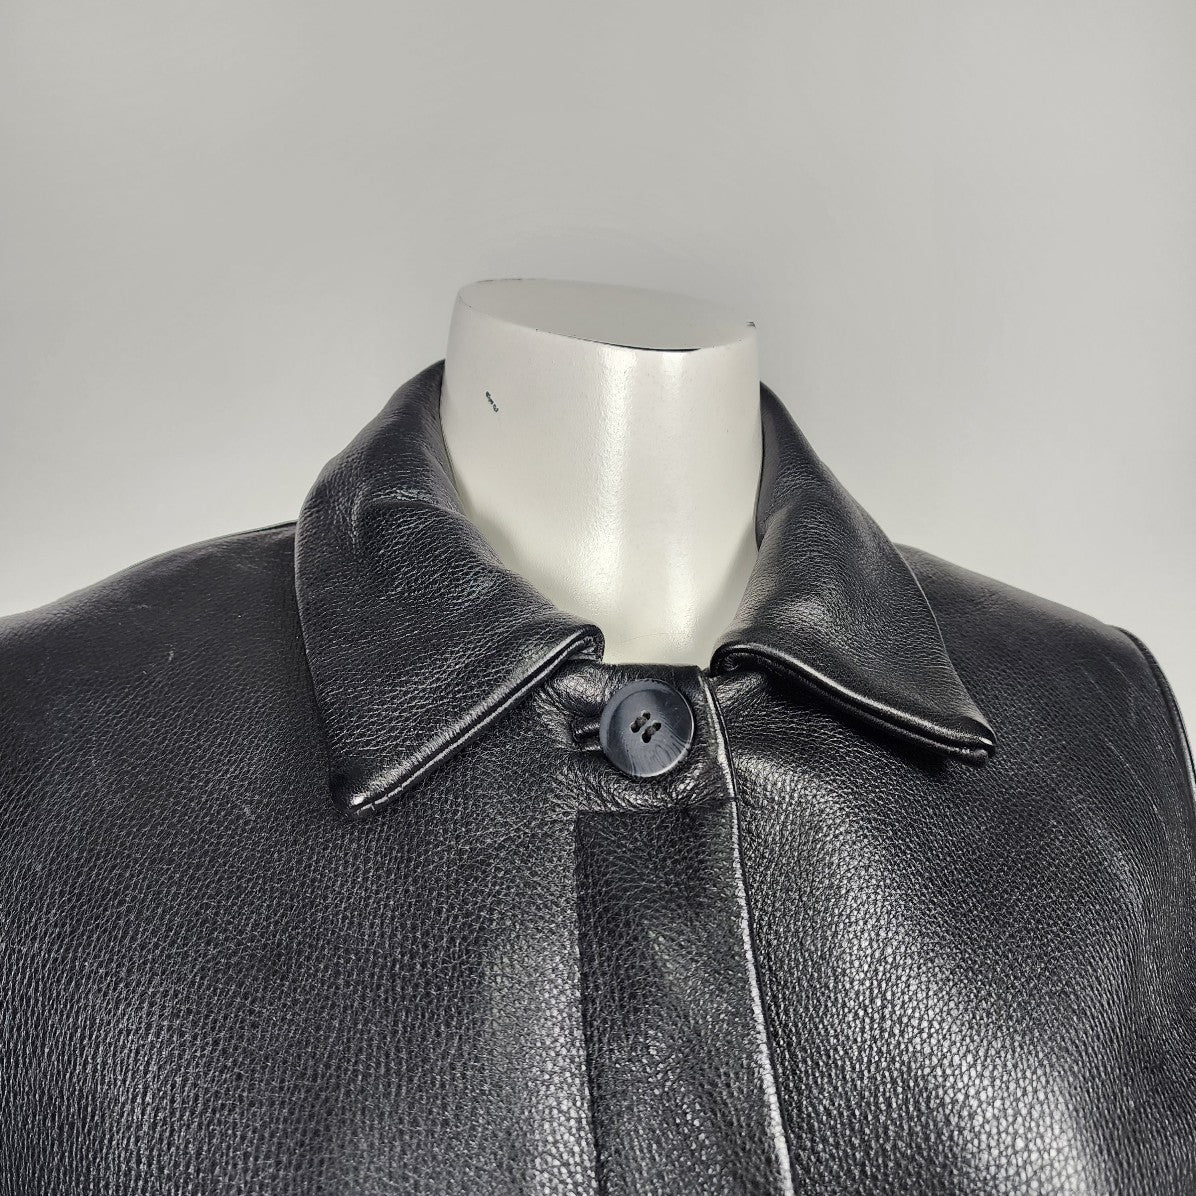 Danier Black Leather Jacket Size XS/S